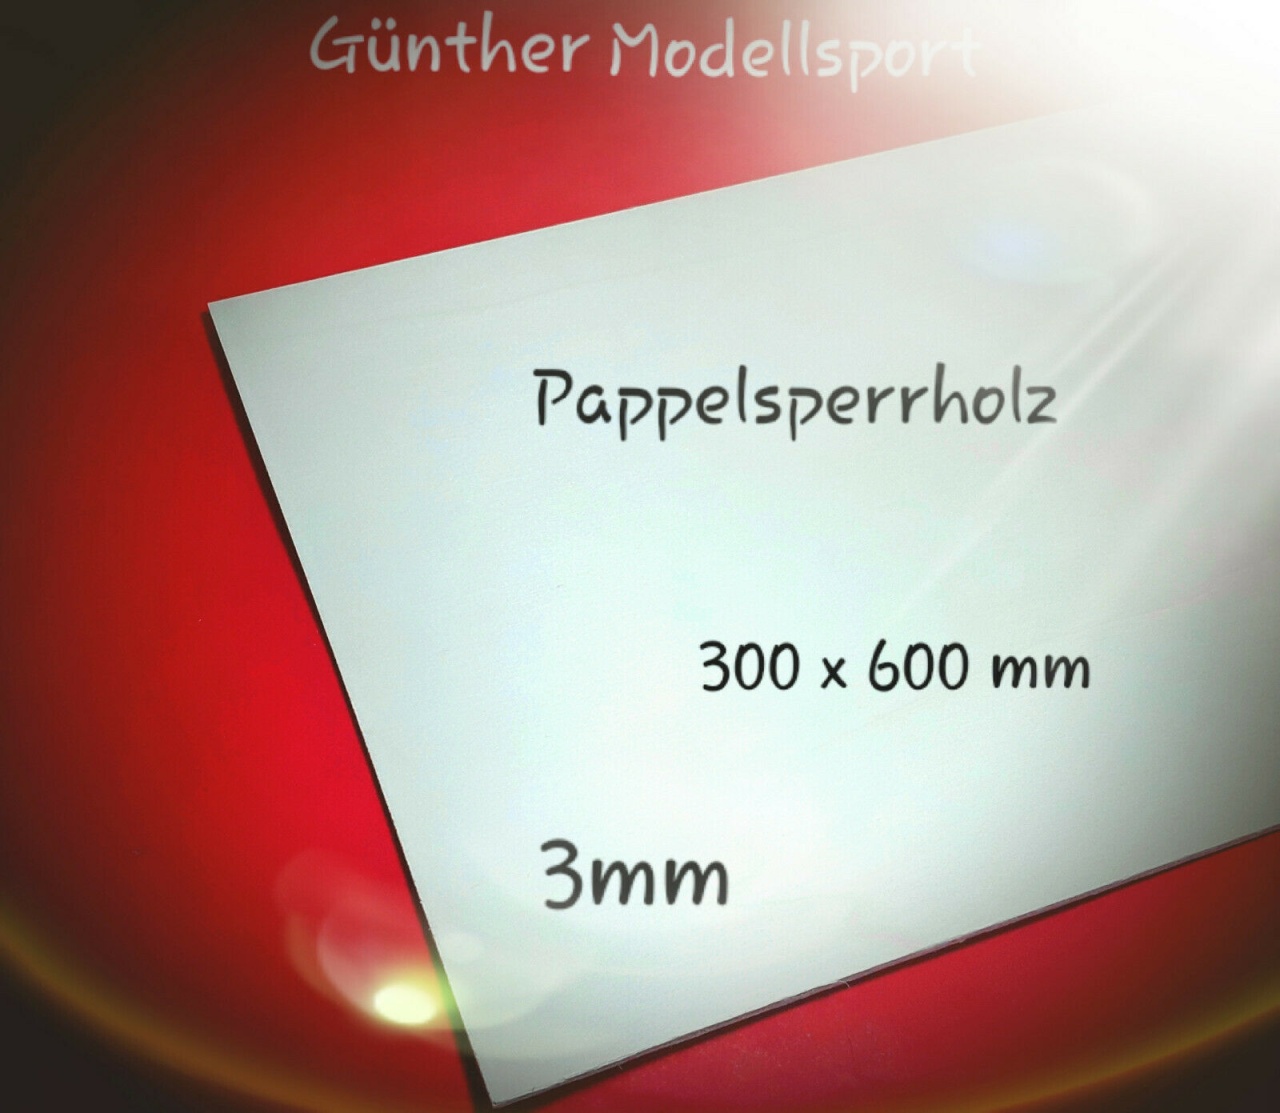 Aigner Pappelsperrholz 3mm, 300 x 600mm, 64040, 27,22euro/m²